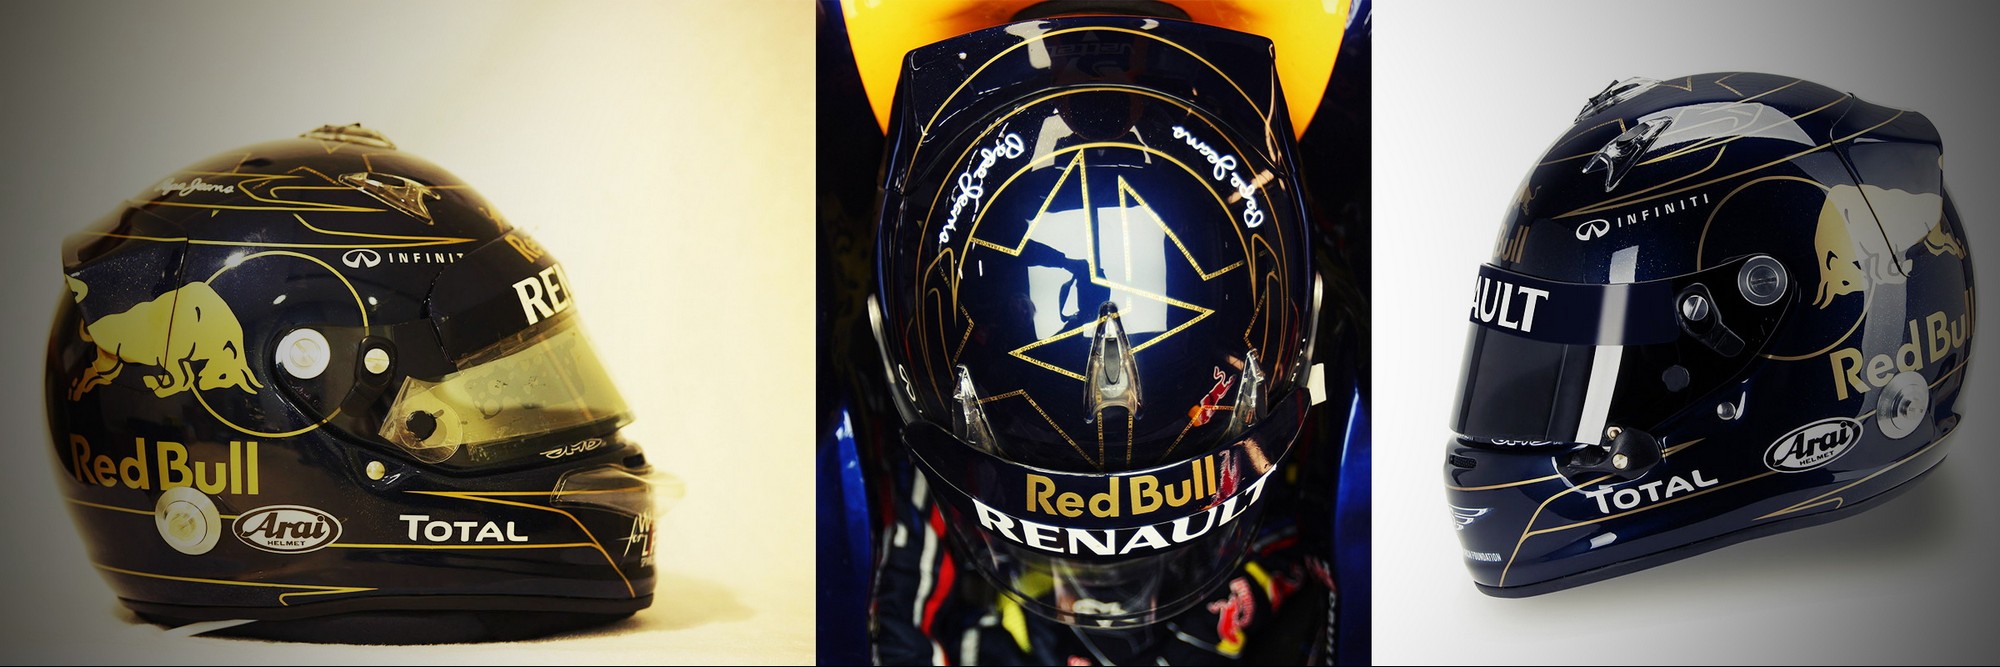 Шлем Себастьяна Феттеля на Гран-При Кореи 2011 | 2011 Korean Grand Prix helmet of Sebastian Vettel